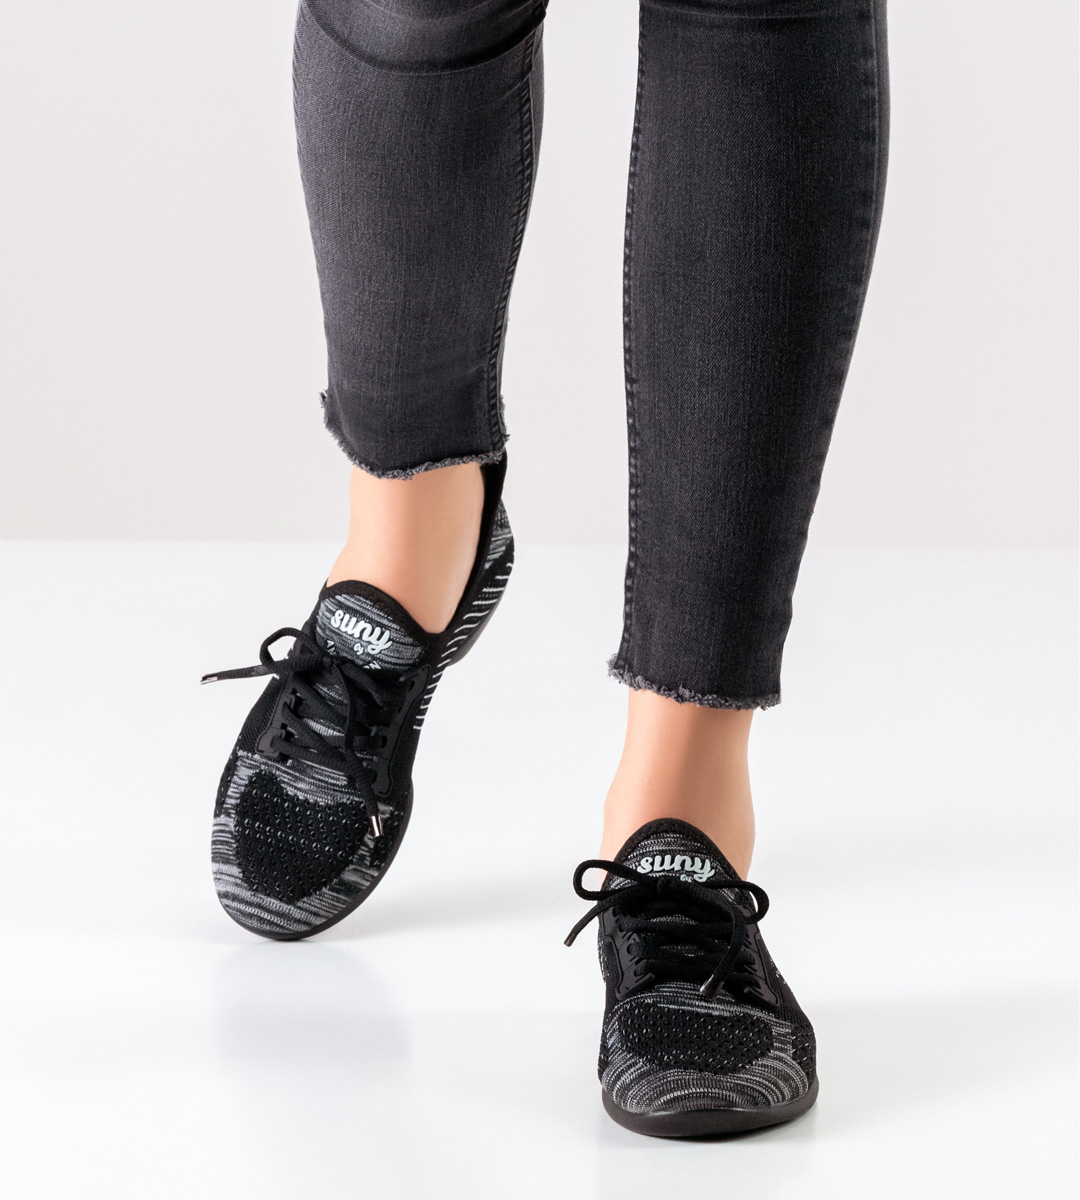 Suny dance sneakers for ladies in black-grey-white